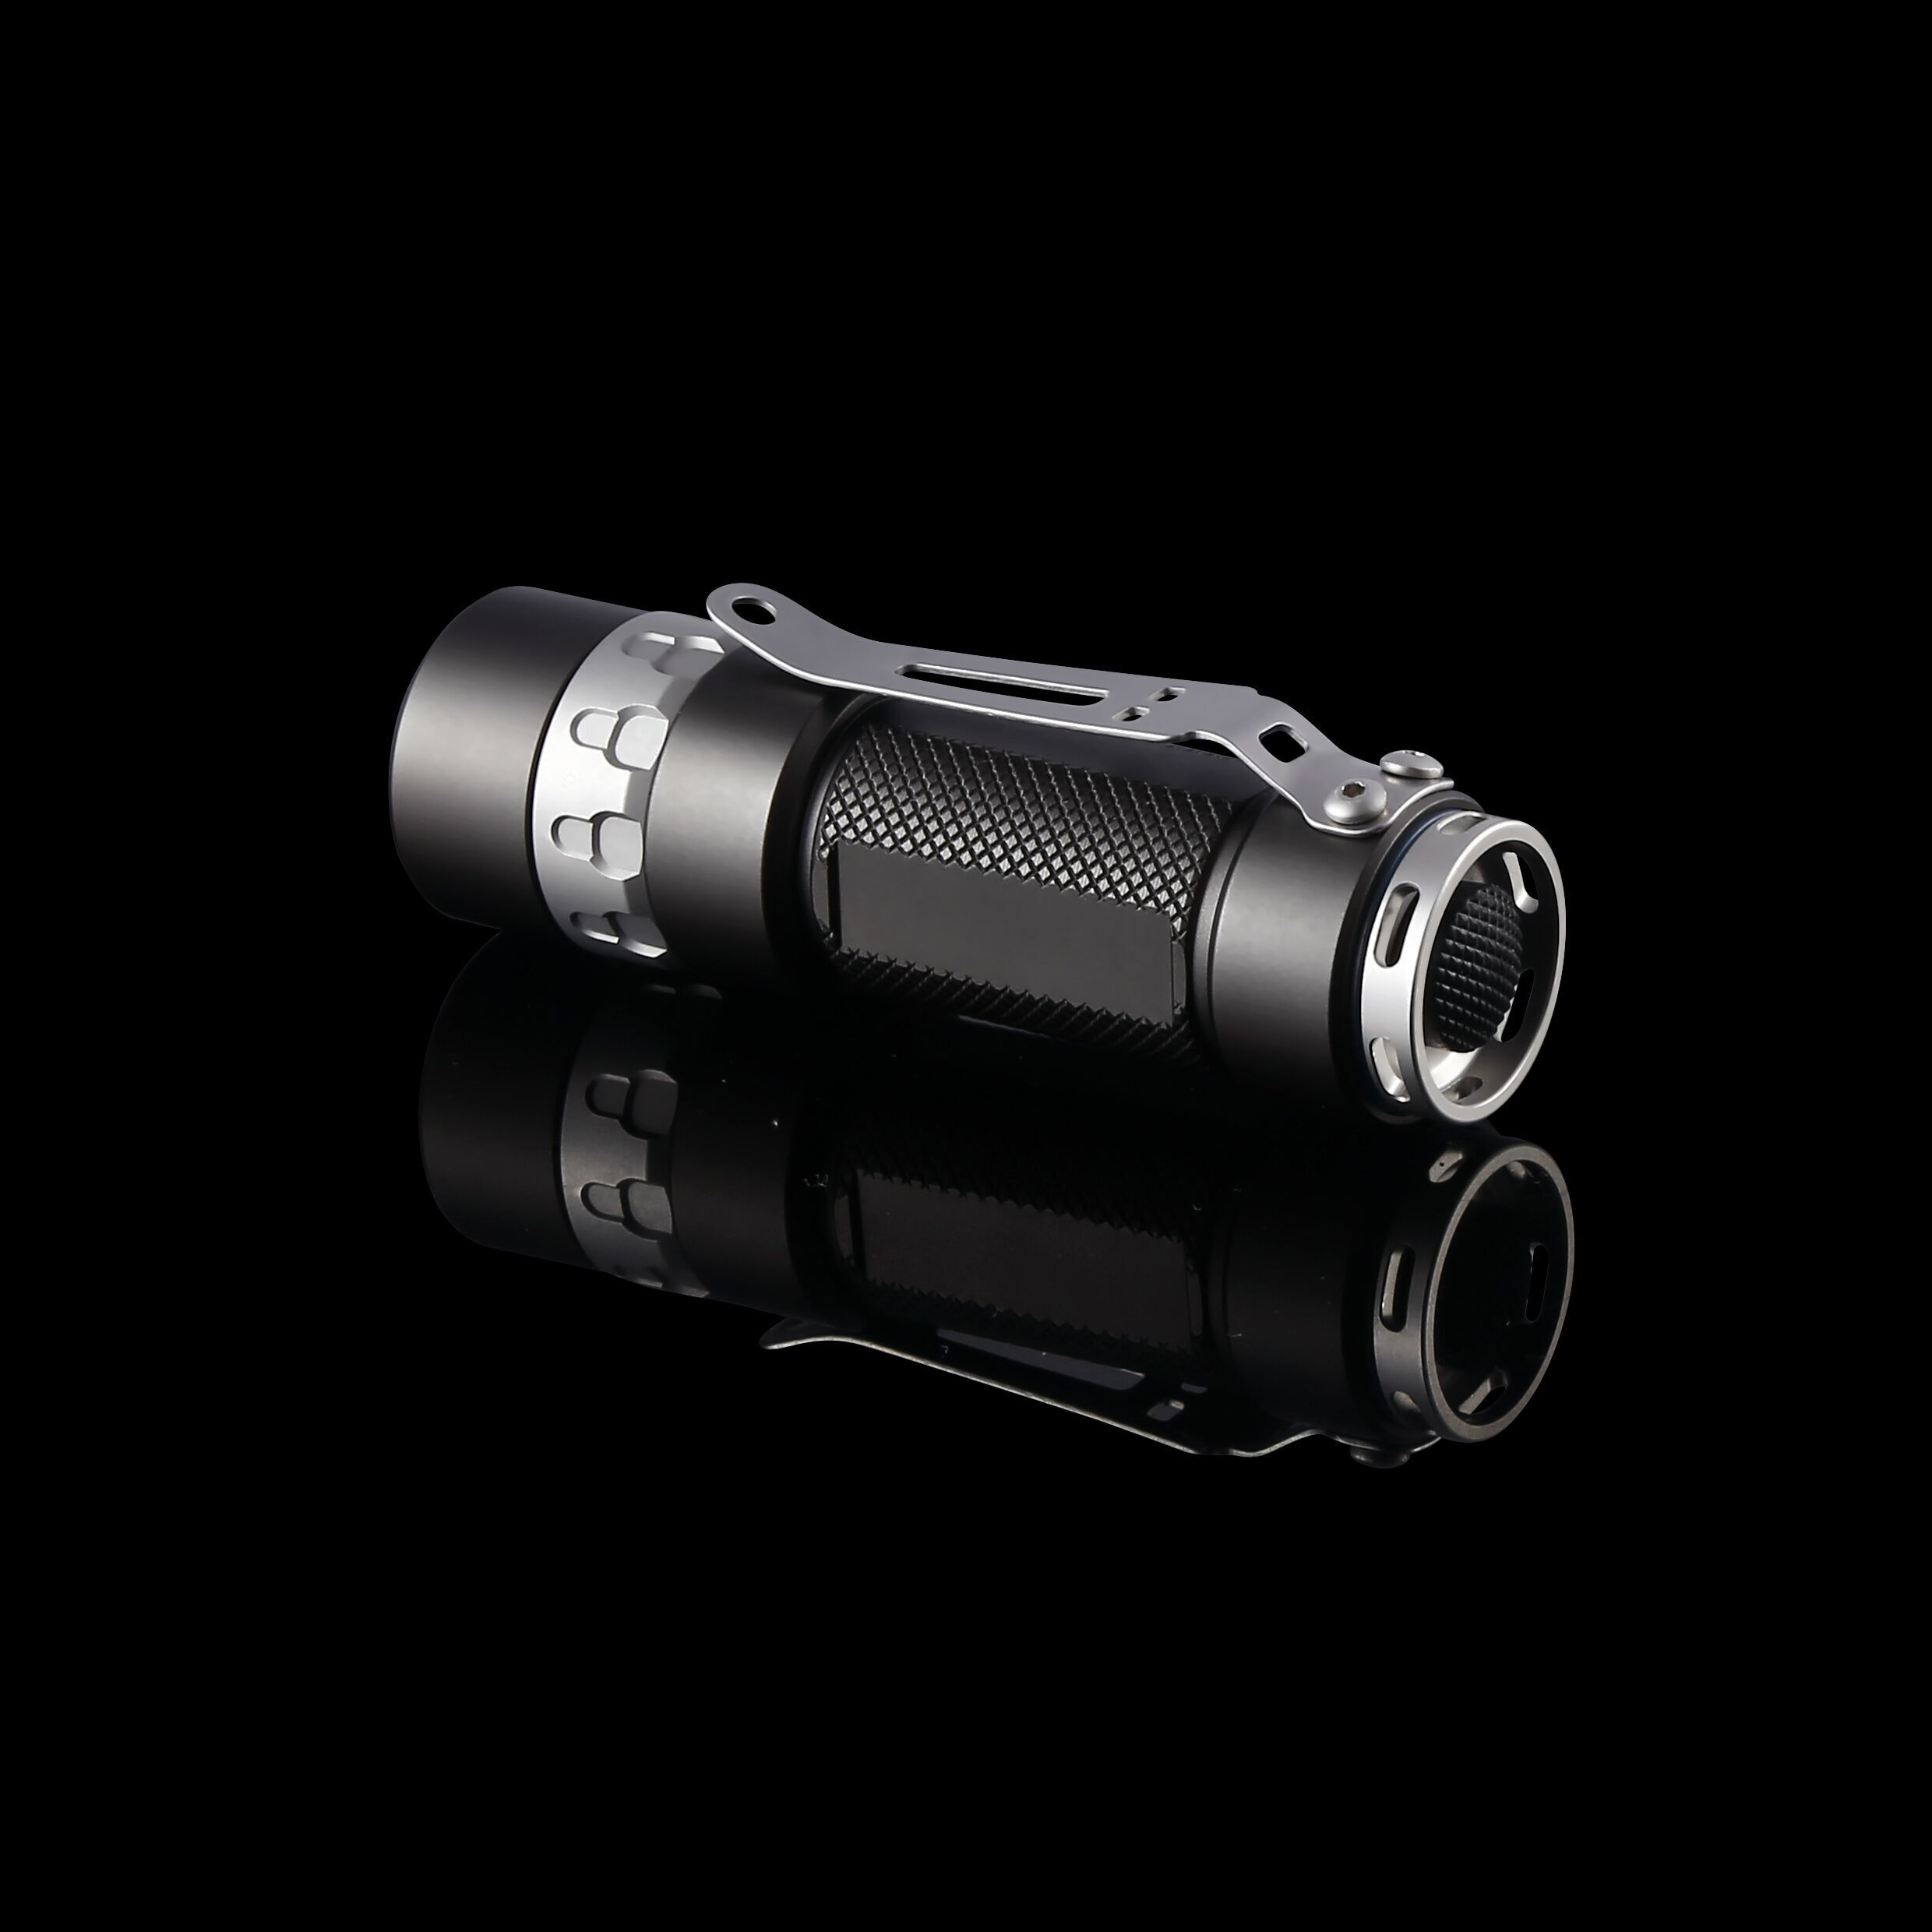 JETBeam RRT03 3*CREE XP-G3 / 3*NICHIA 219C LED 1400 Lumens Magnetic Control Ring Tactical Flashlight (Extenders)